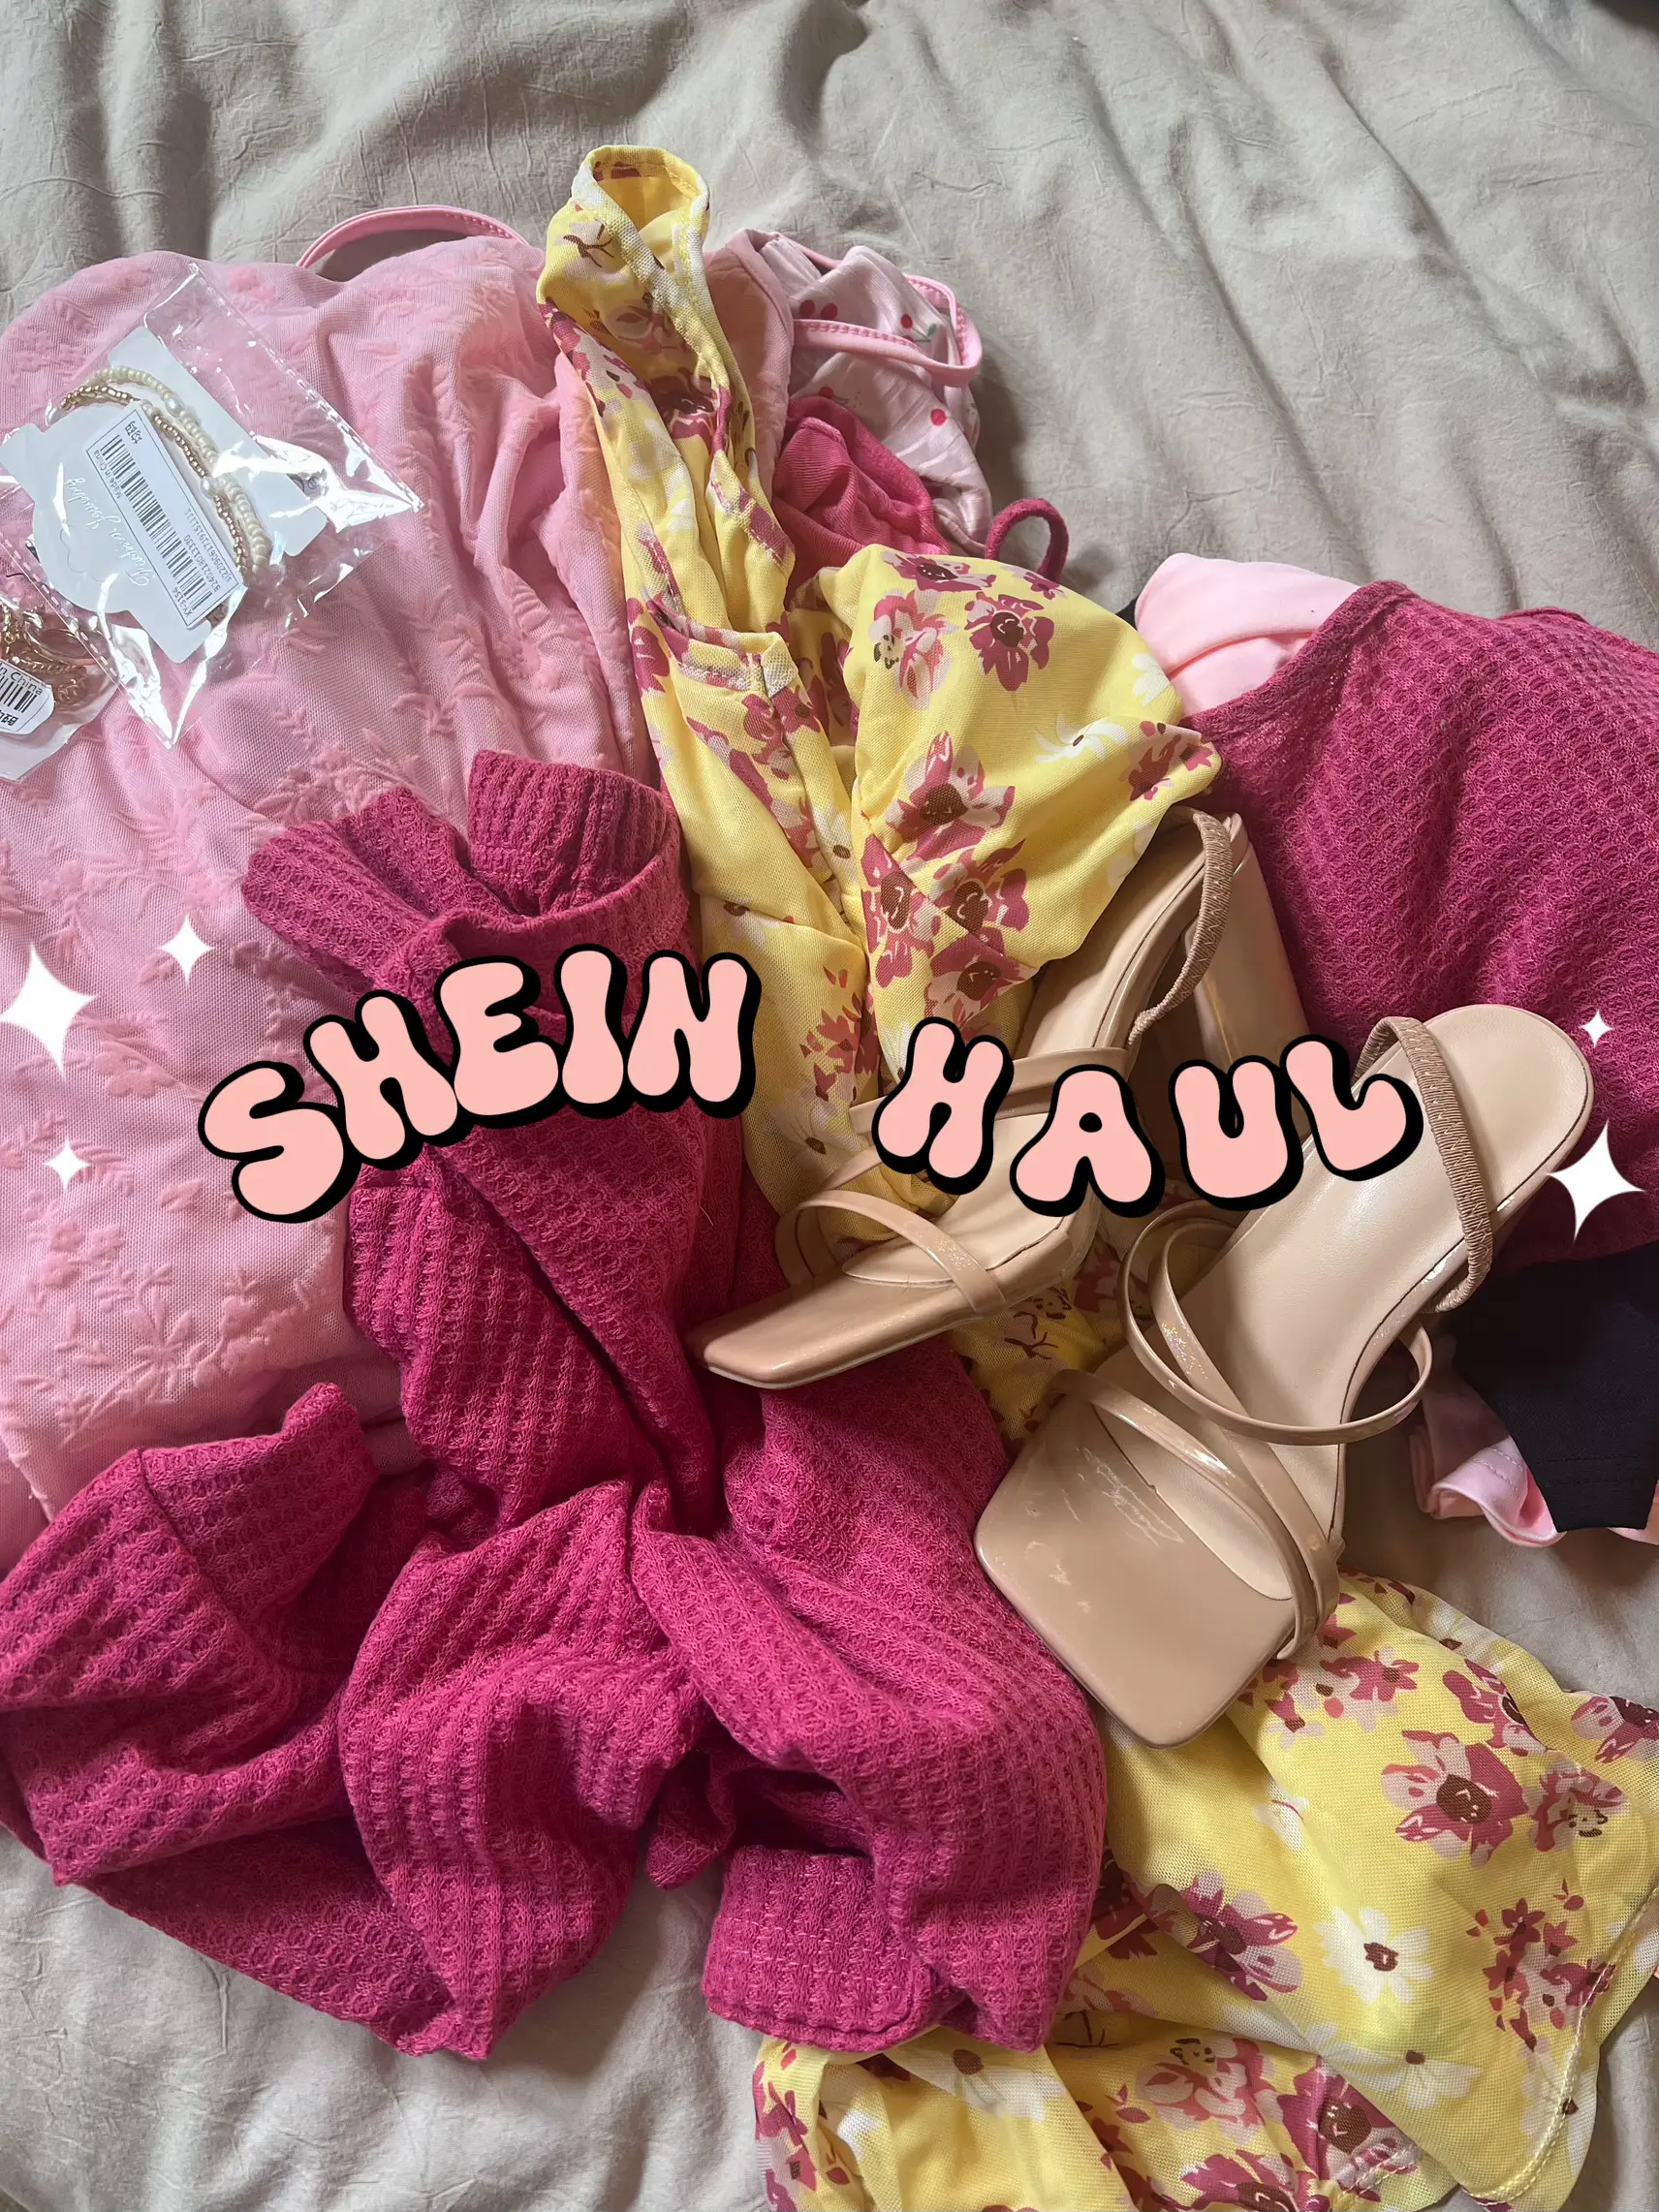 SHEIN -Try On- FASHION & CLOTHING HAUL 2022: SKIMS DUPES + WORKOUT SETS +  JEWELRY #shein #sheinhaul 